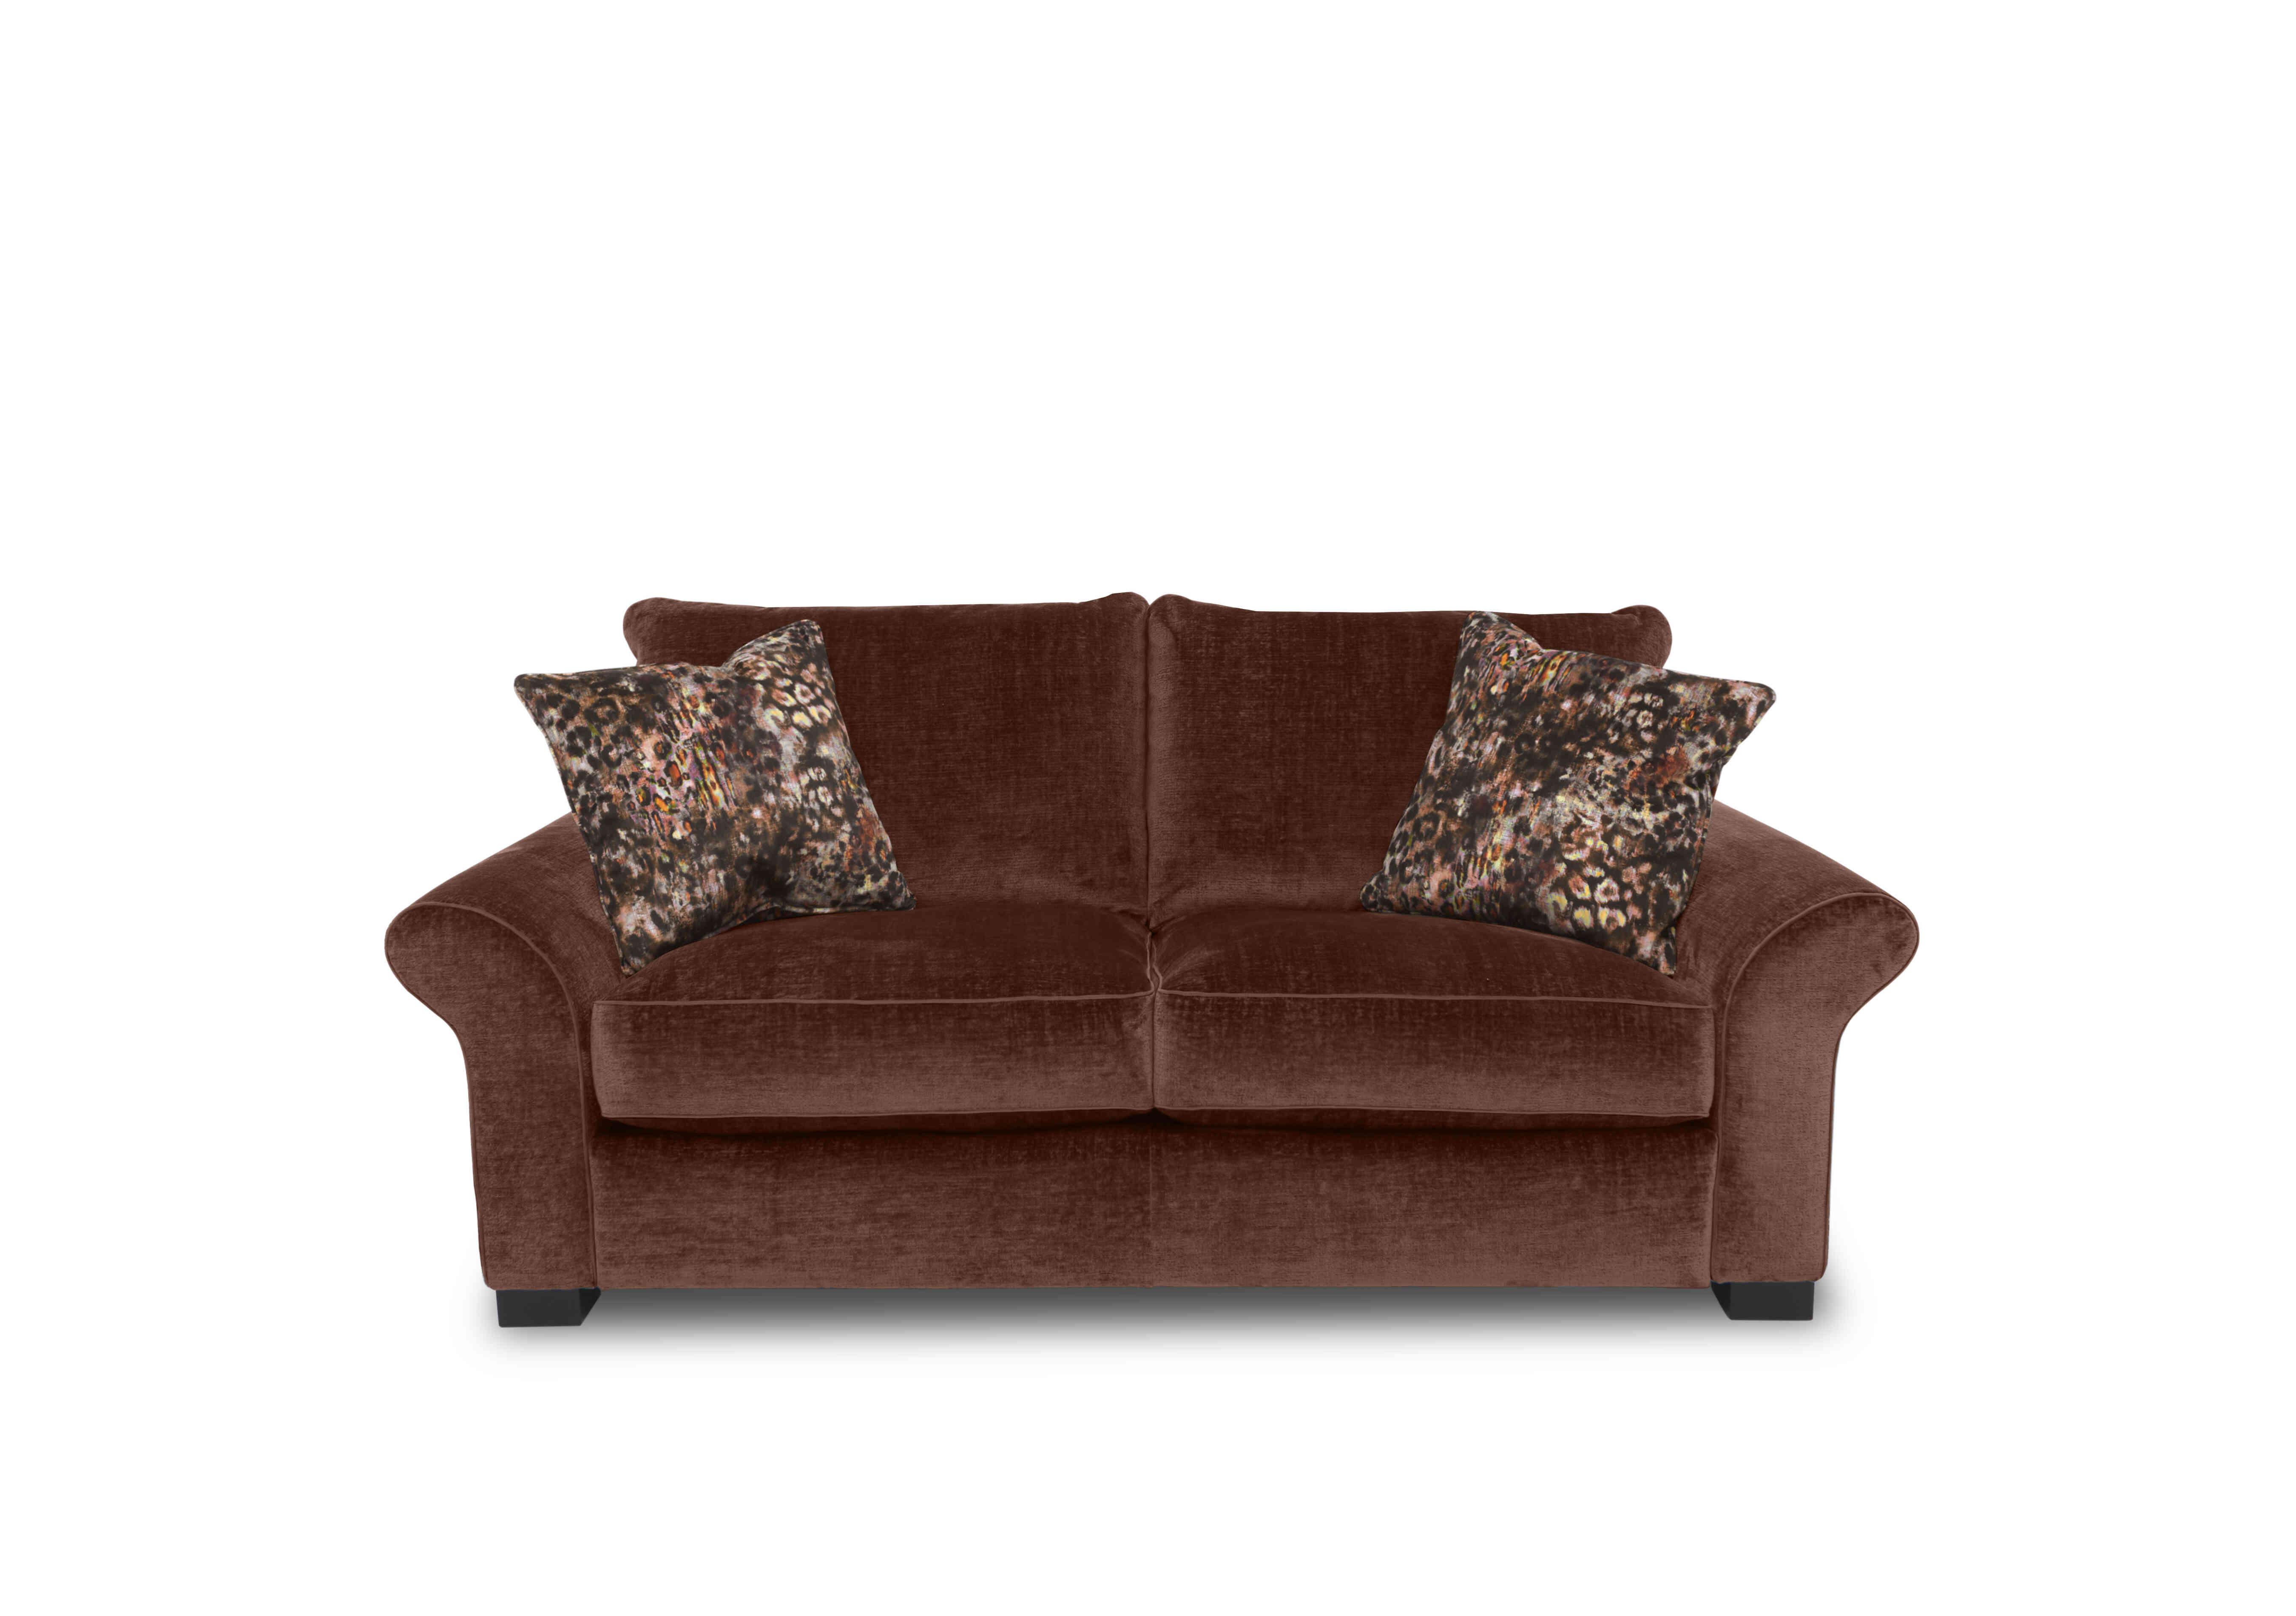 Modern Classics Hyde Park 2 Seater Sofa in Remini Molten Sp Mf on Furniture Village